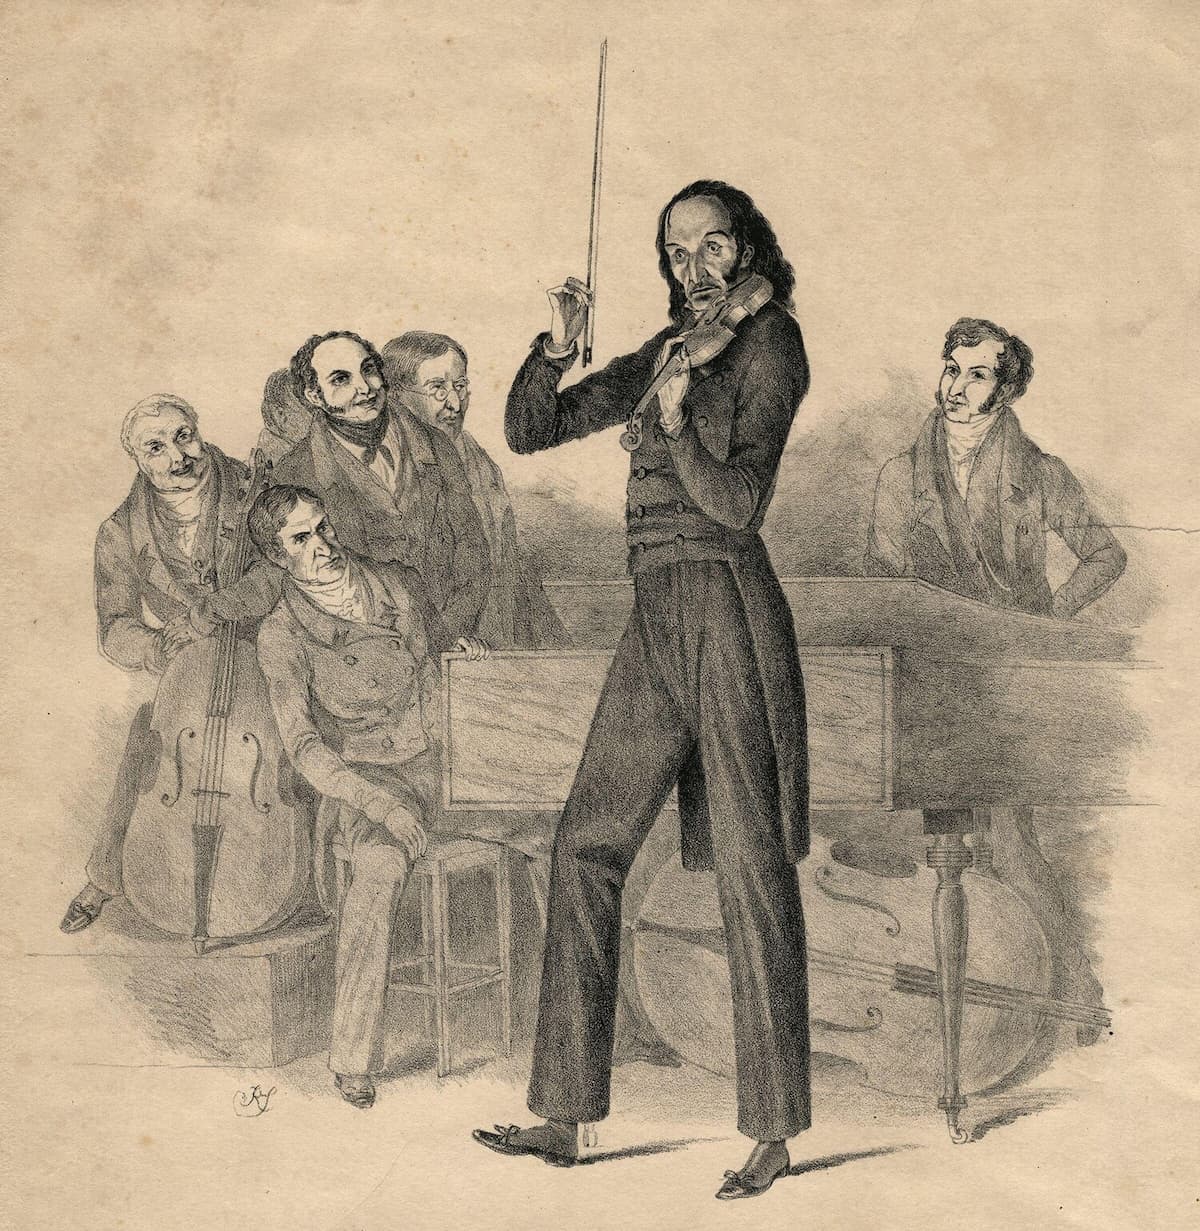 Nicolo Paganini, by Richard James Lane